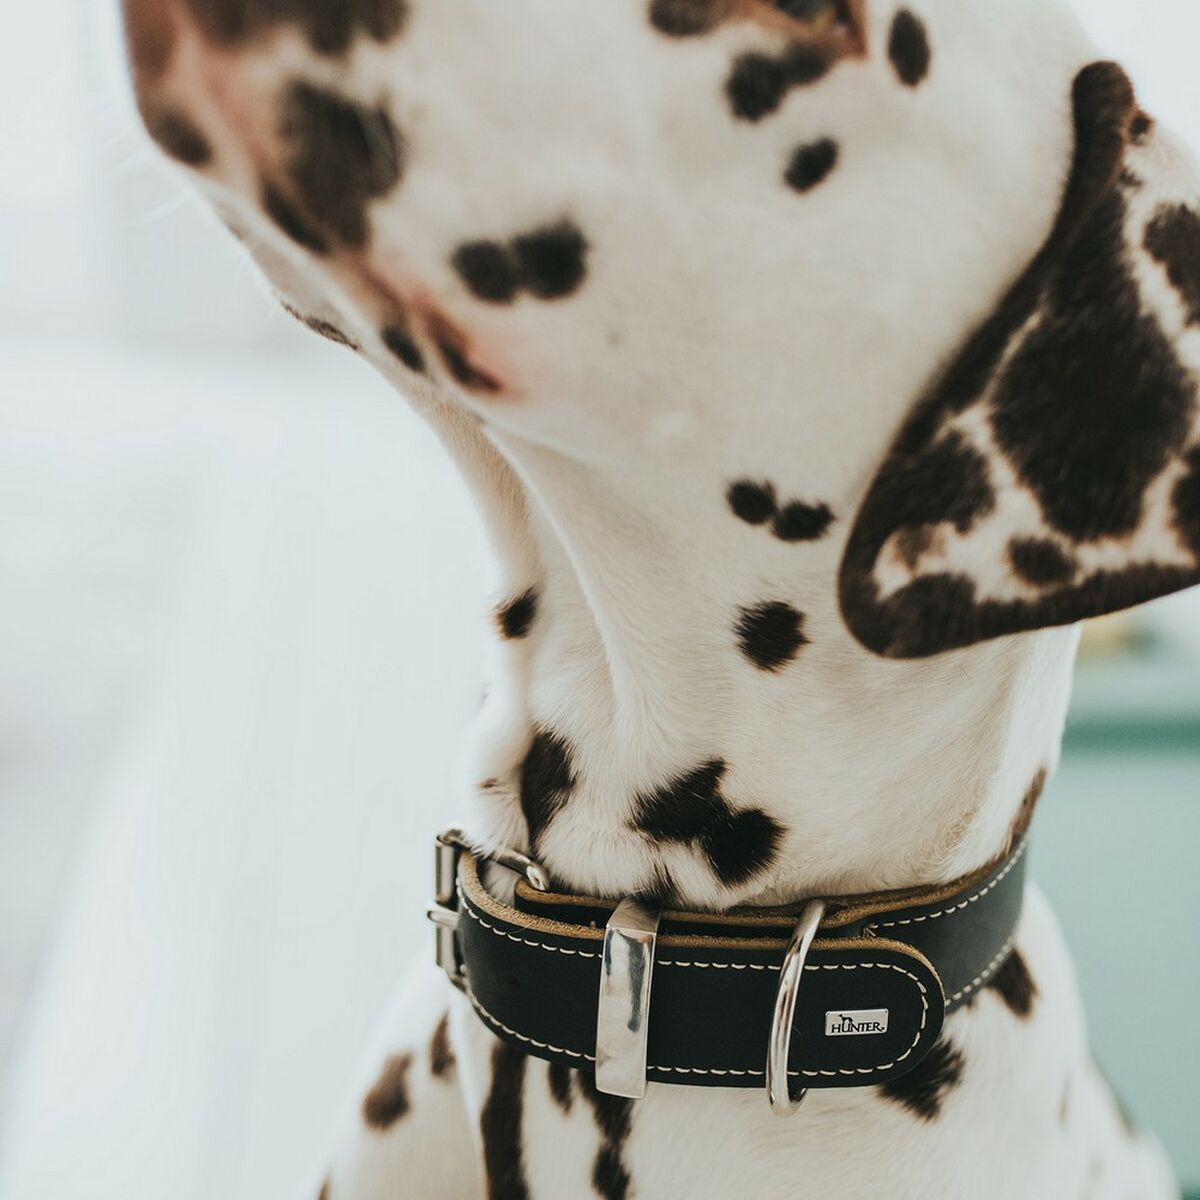 Dog collar Hunter Aalborg Black (20-24 cm)